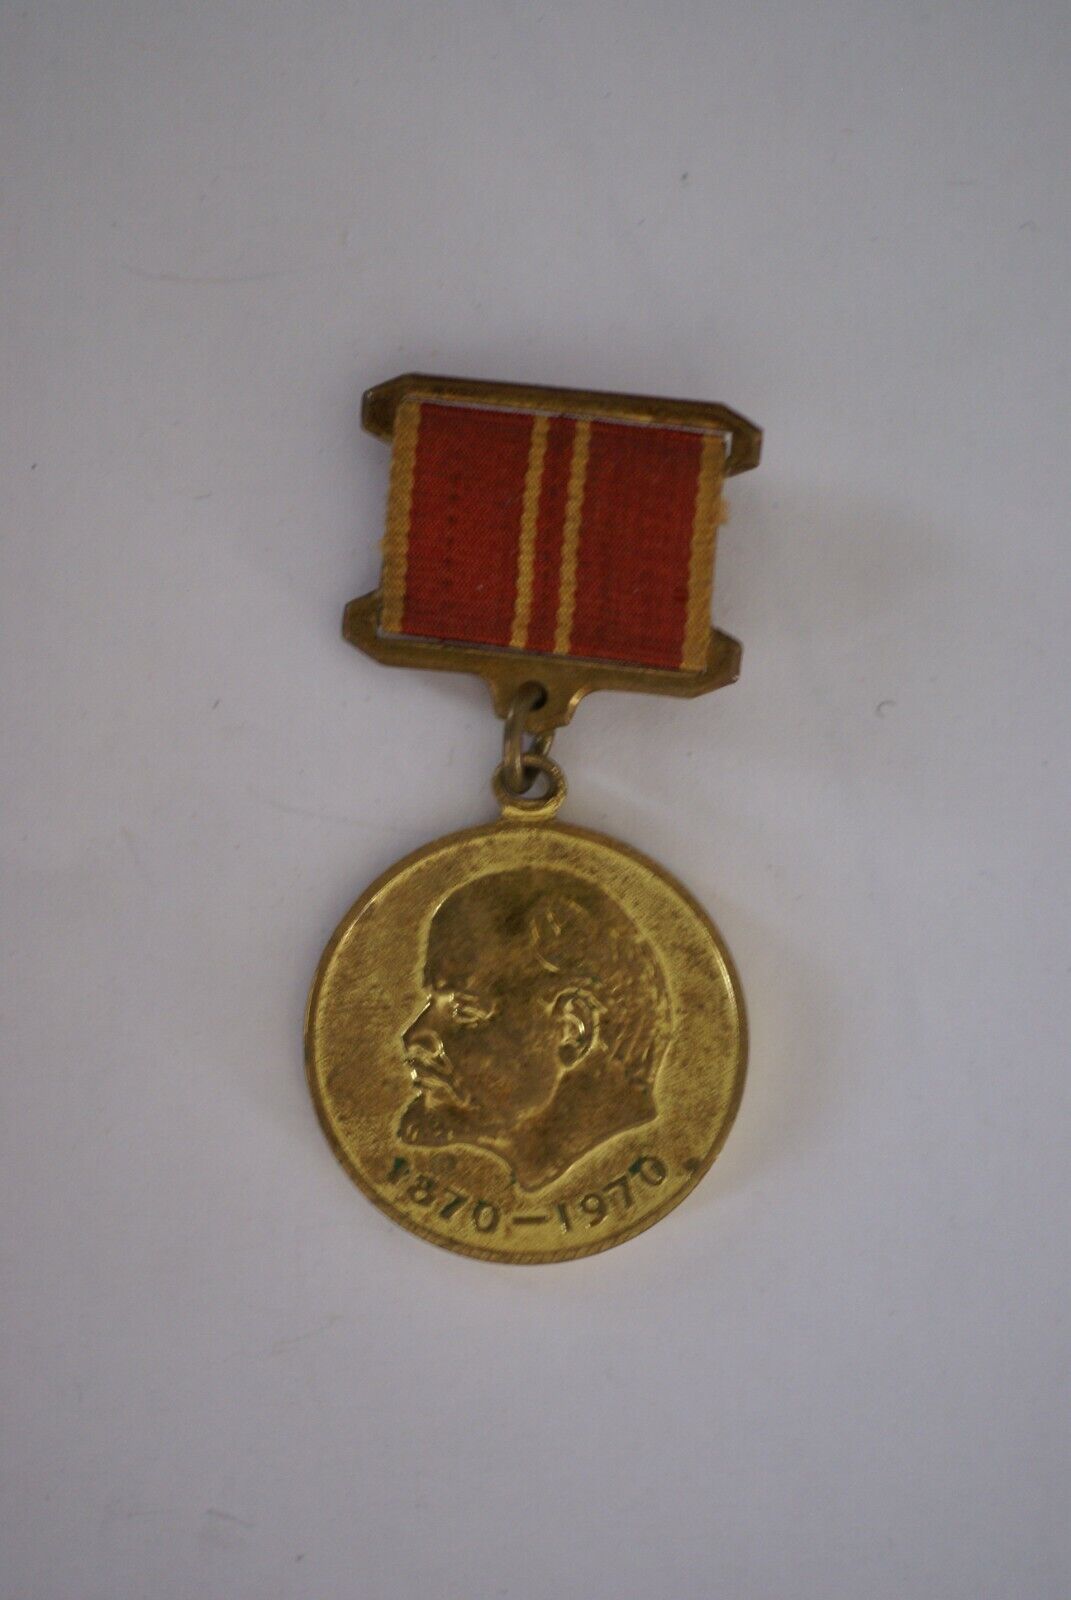 Soviet Russia medal for the Centenary of Lenin's birth 1870-1970